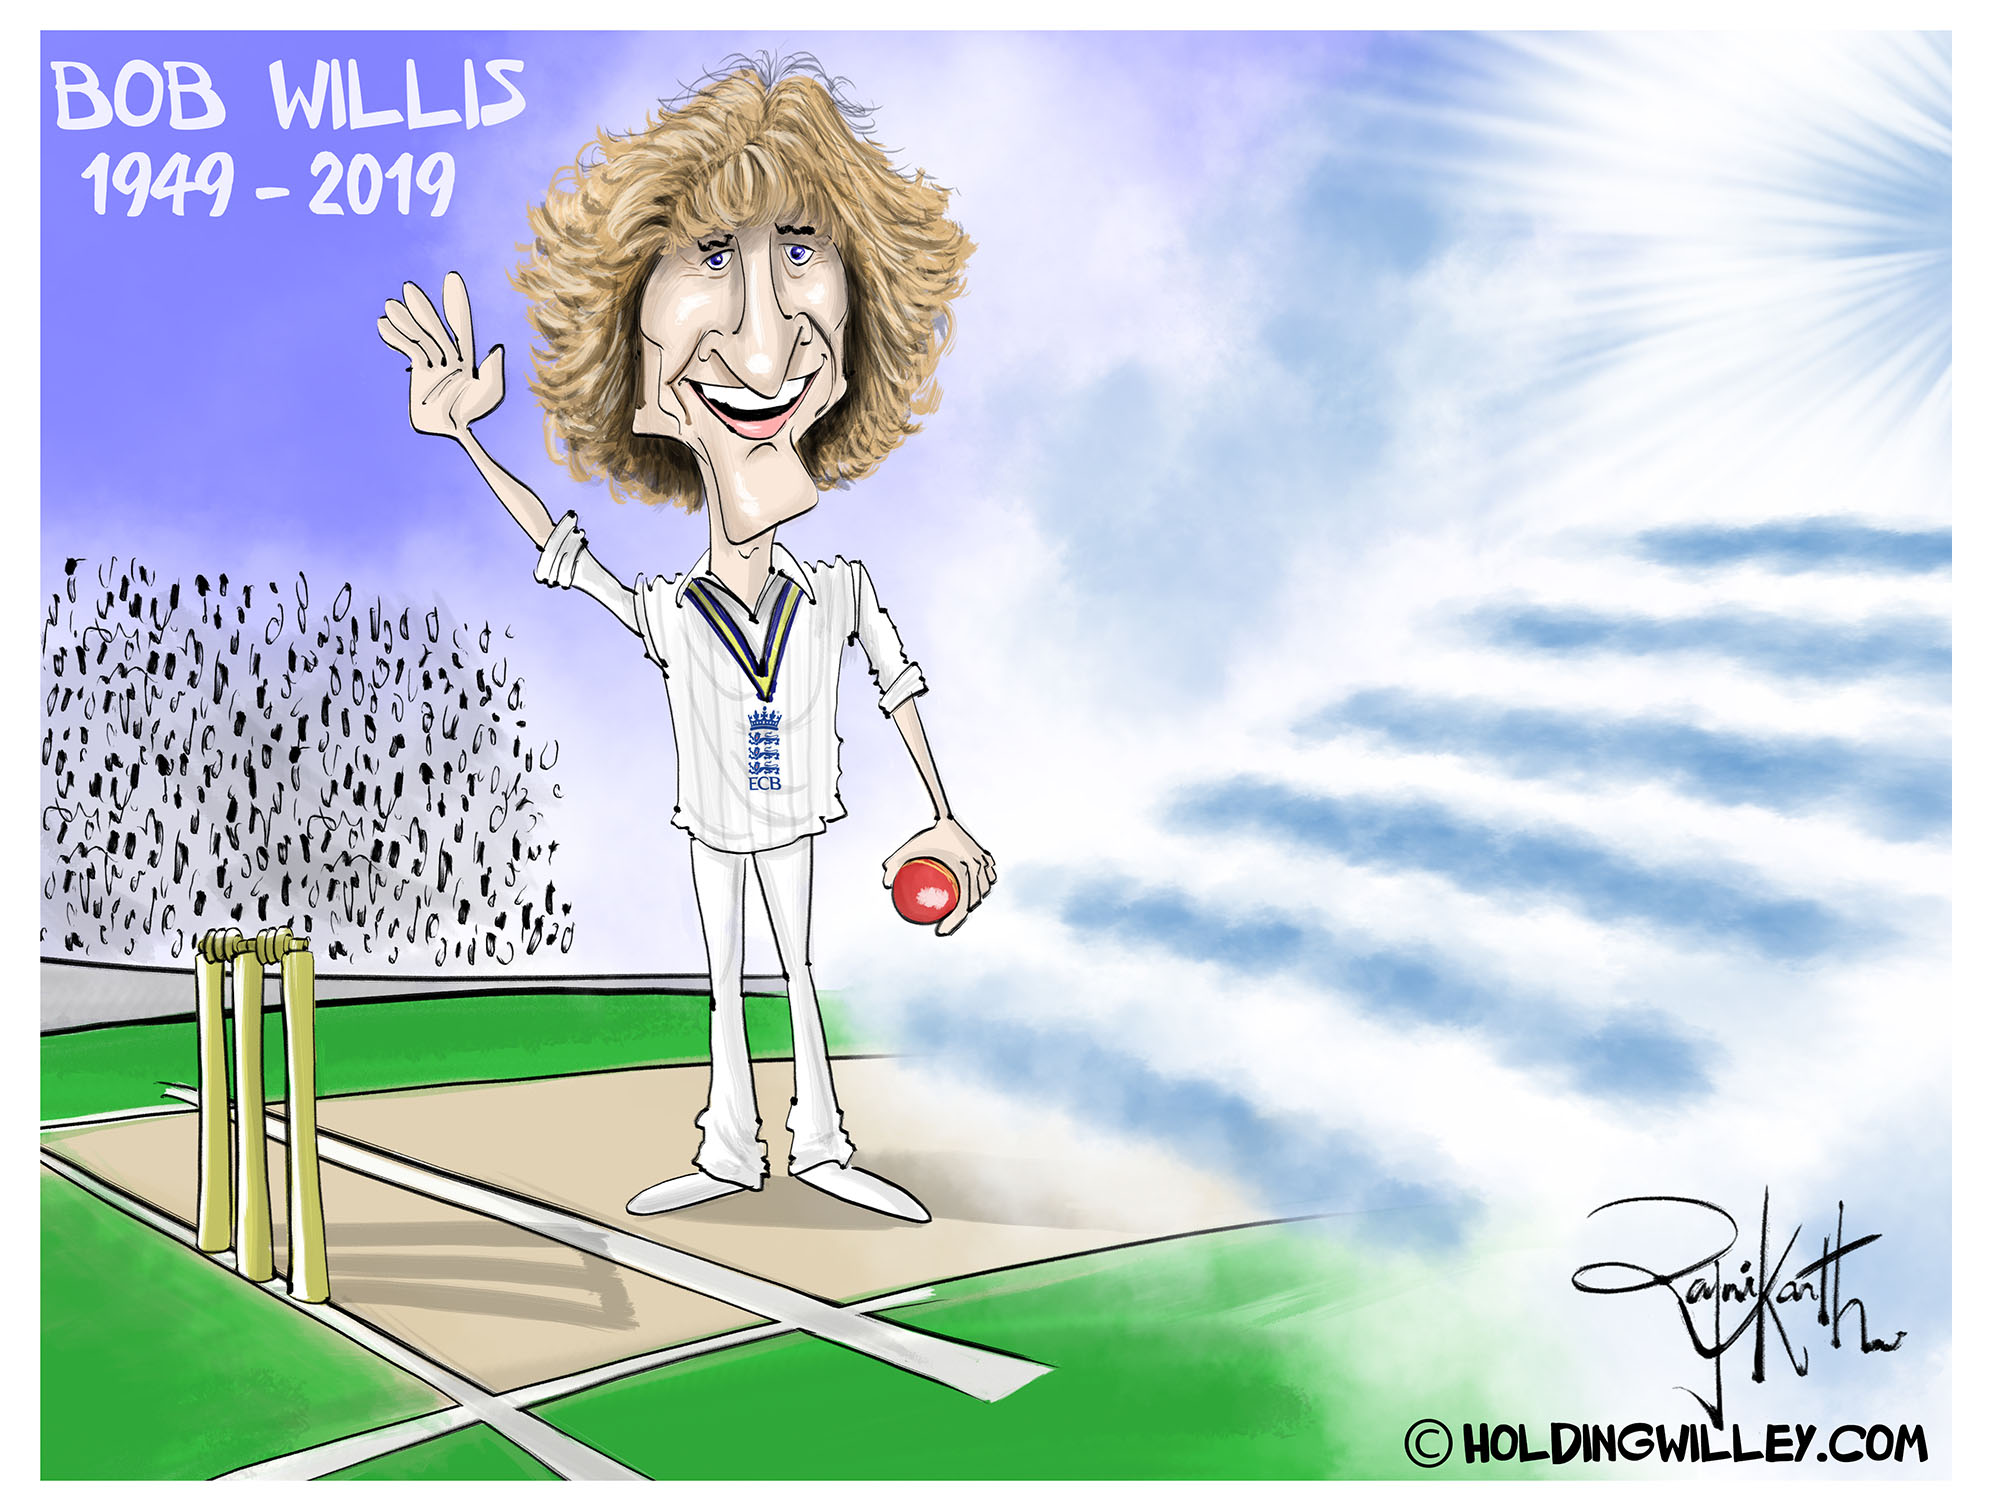 Bob_Willis_England_Cricket_legend